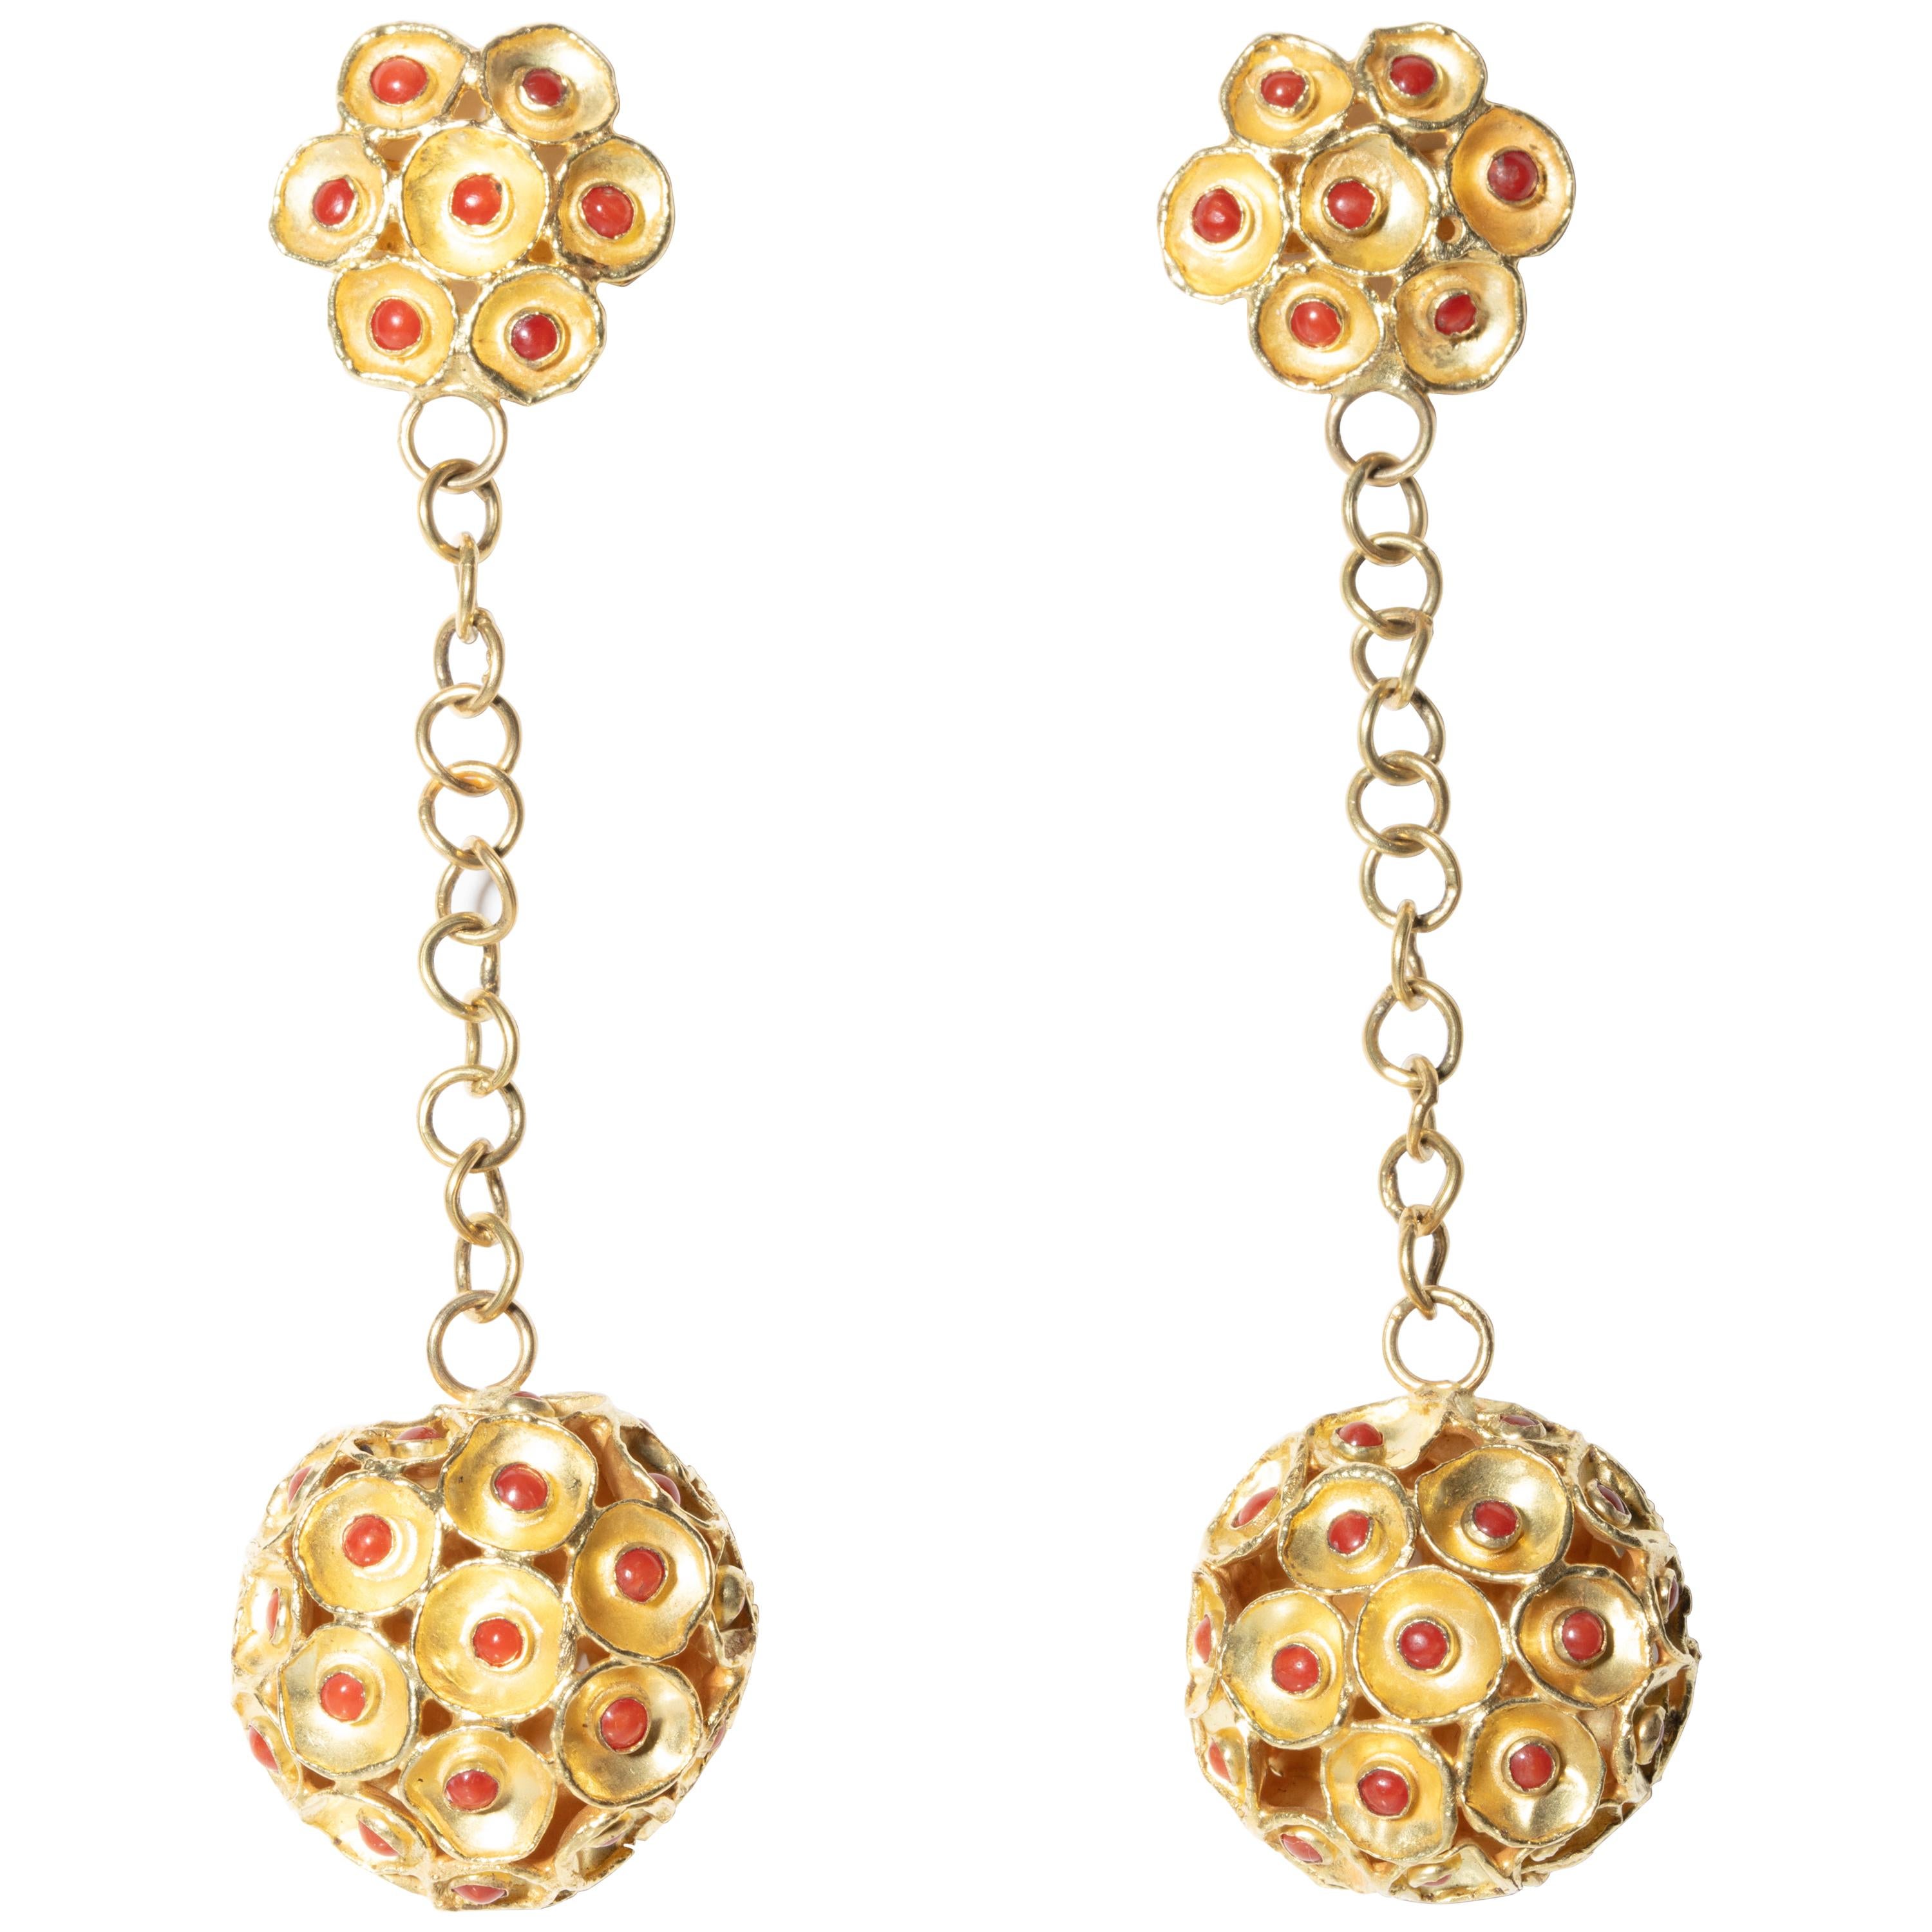 Boucles d'oreilles chandelier en or 22 carats et corail Ball and Ball